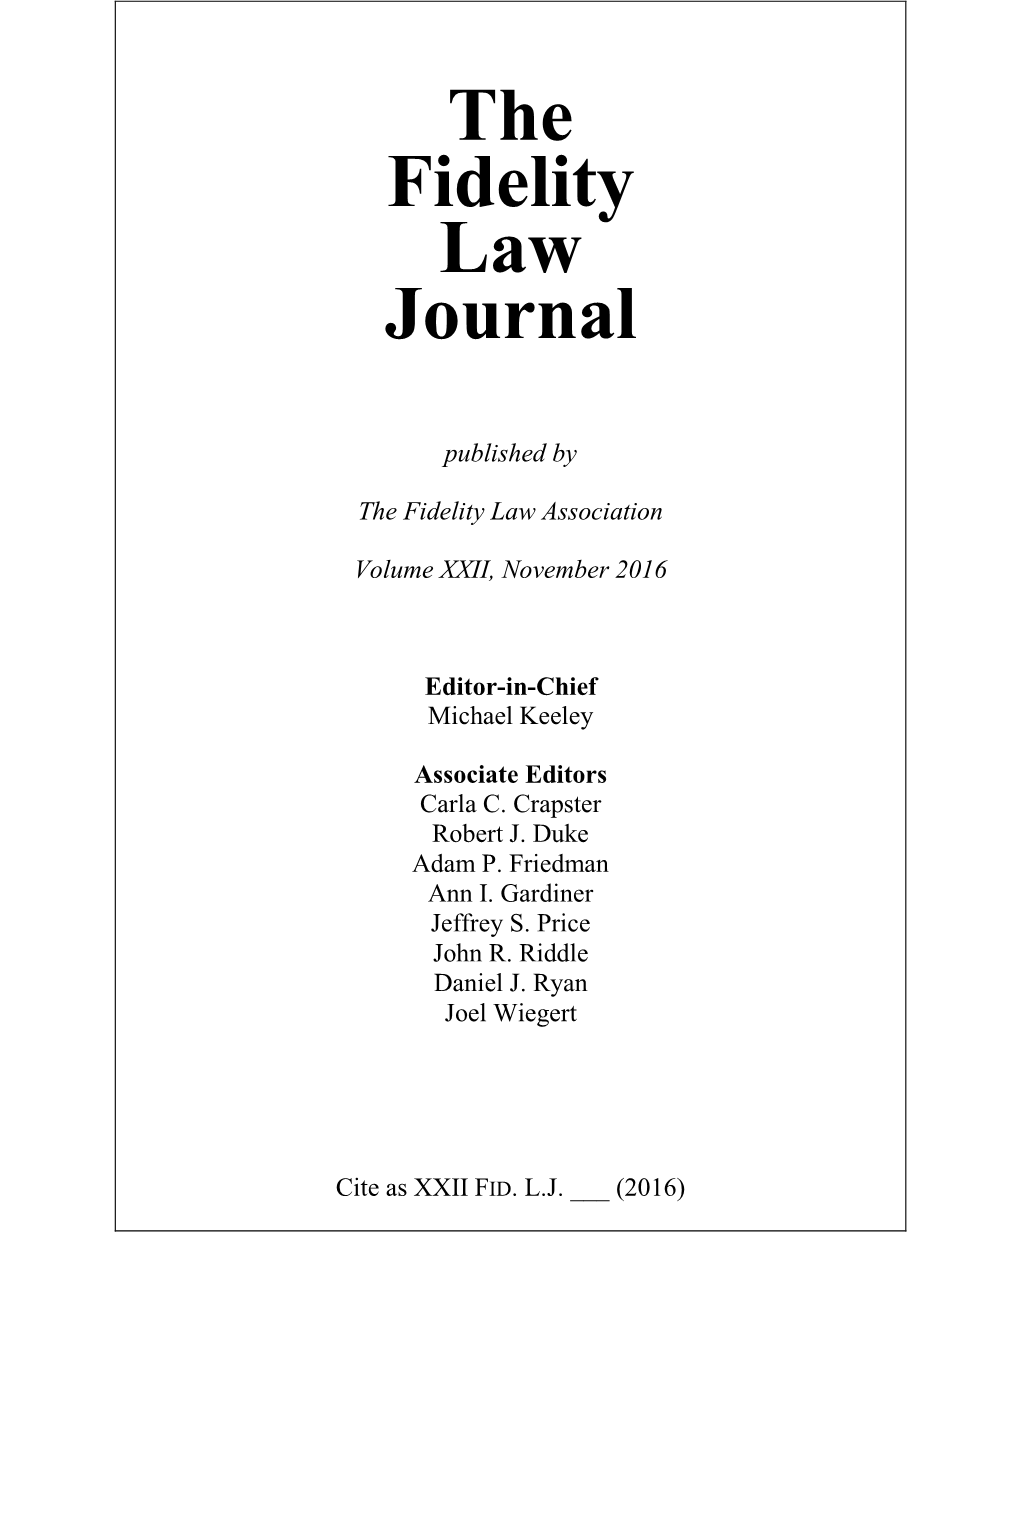 The Fidelity Law Journal